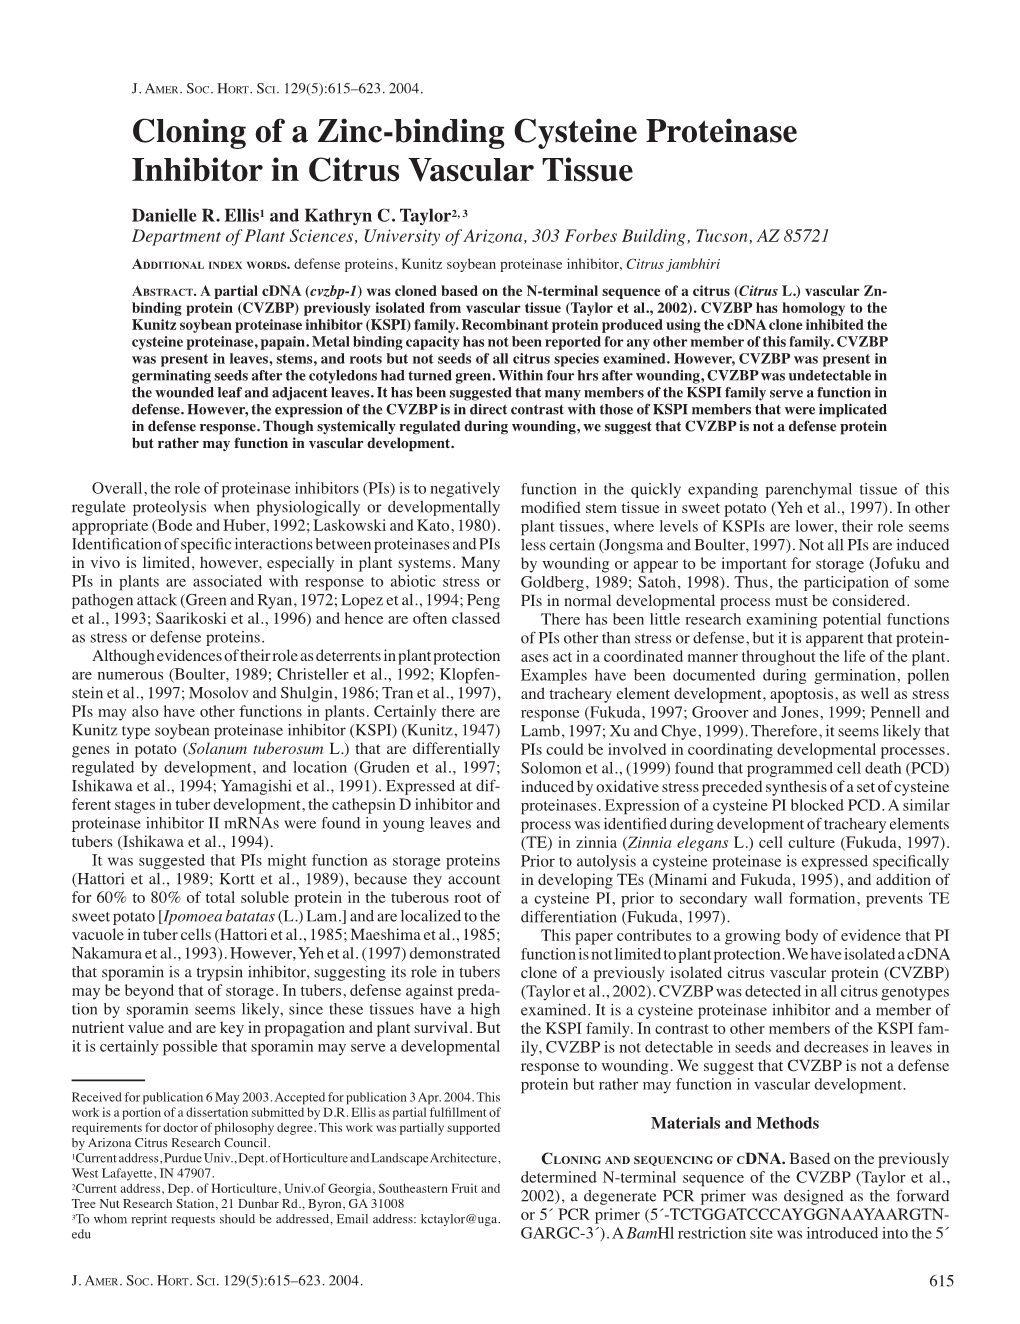 Cloning of a Zinc-Binding Cysteine Proteinase Inhibitor in Citrus Vascular Tissue